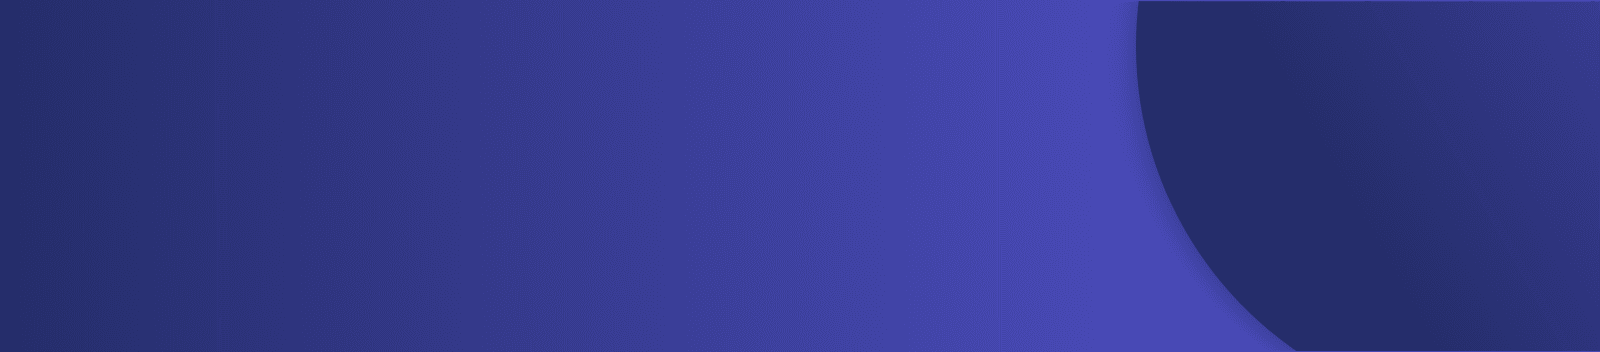 purple-banner